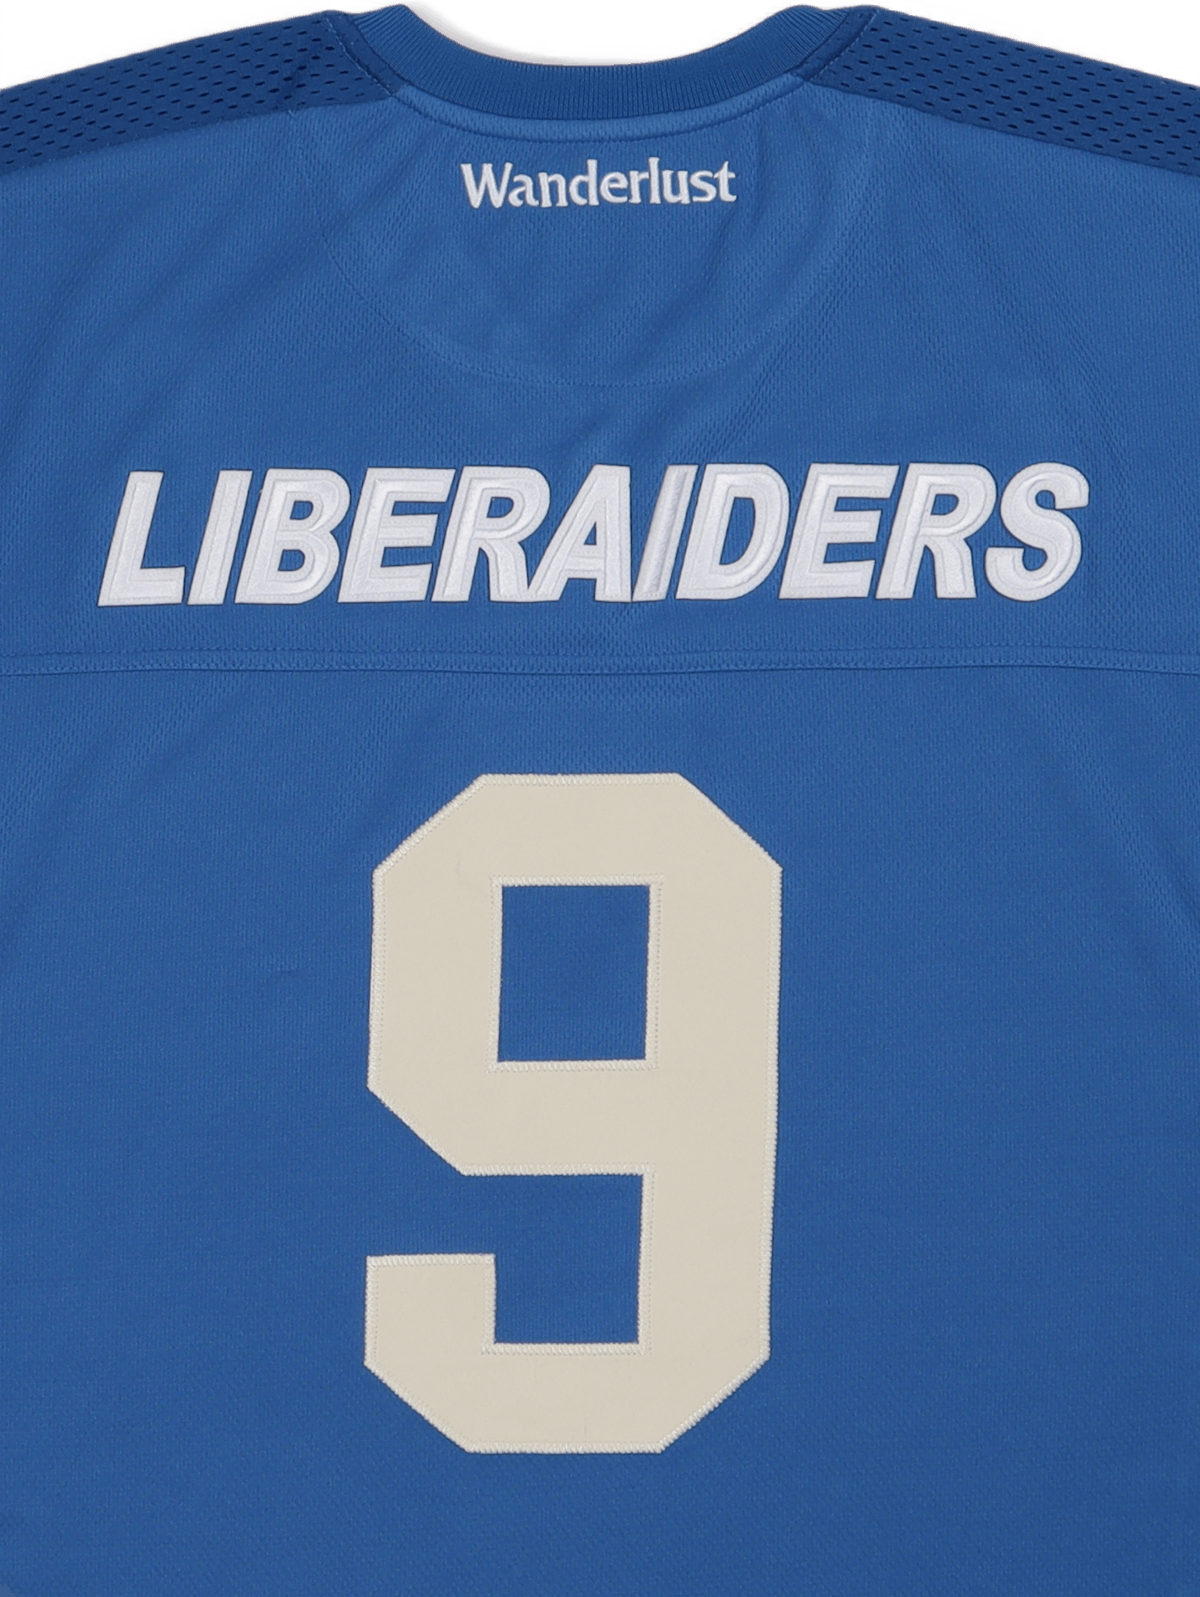 Liberaiders Hockey Shirts Blue